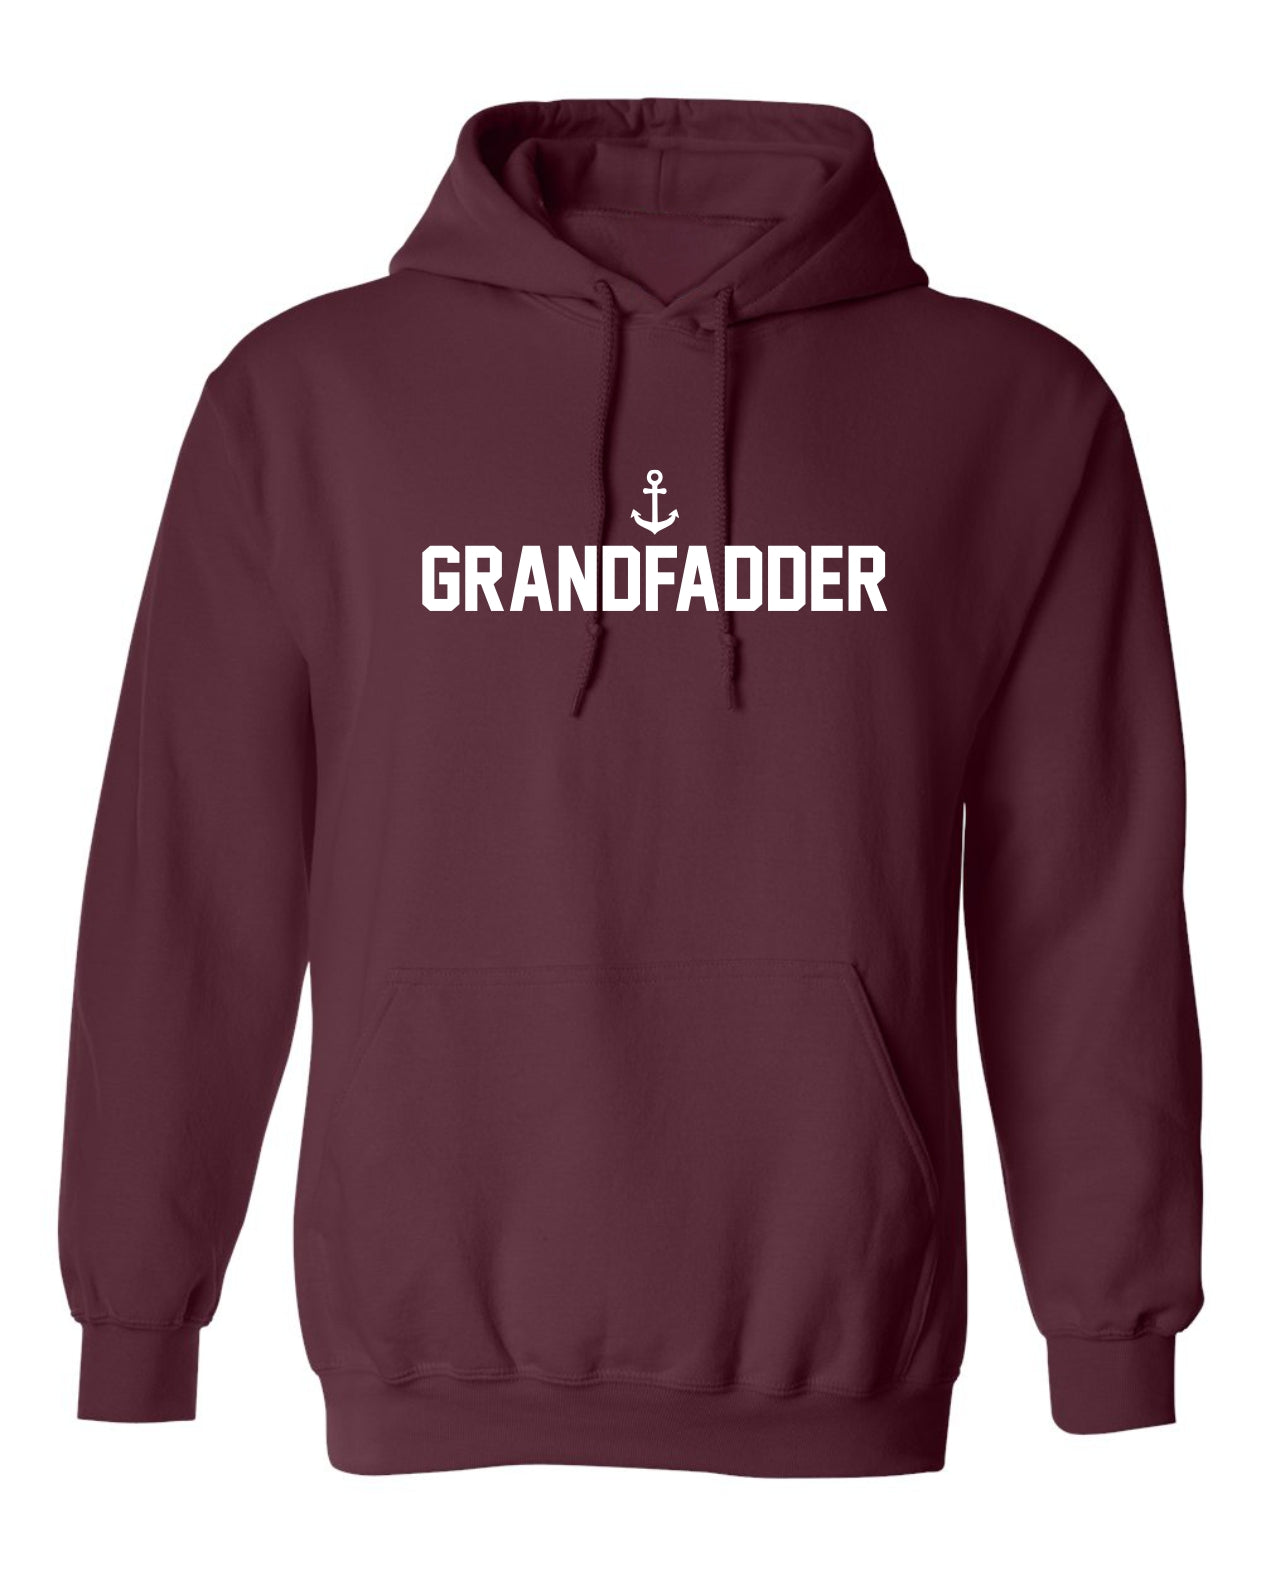 "Grandfadder" Unisex Hoodie